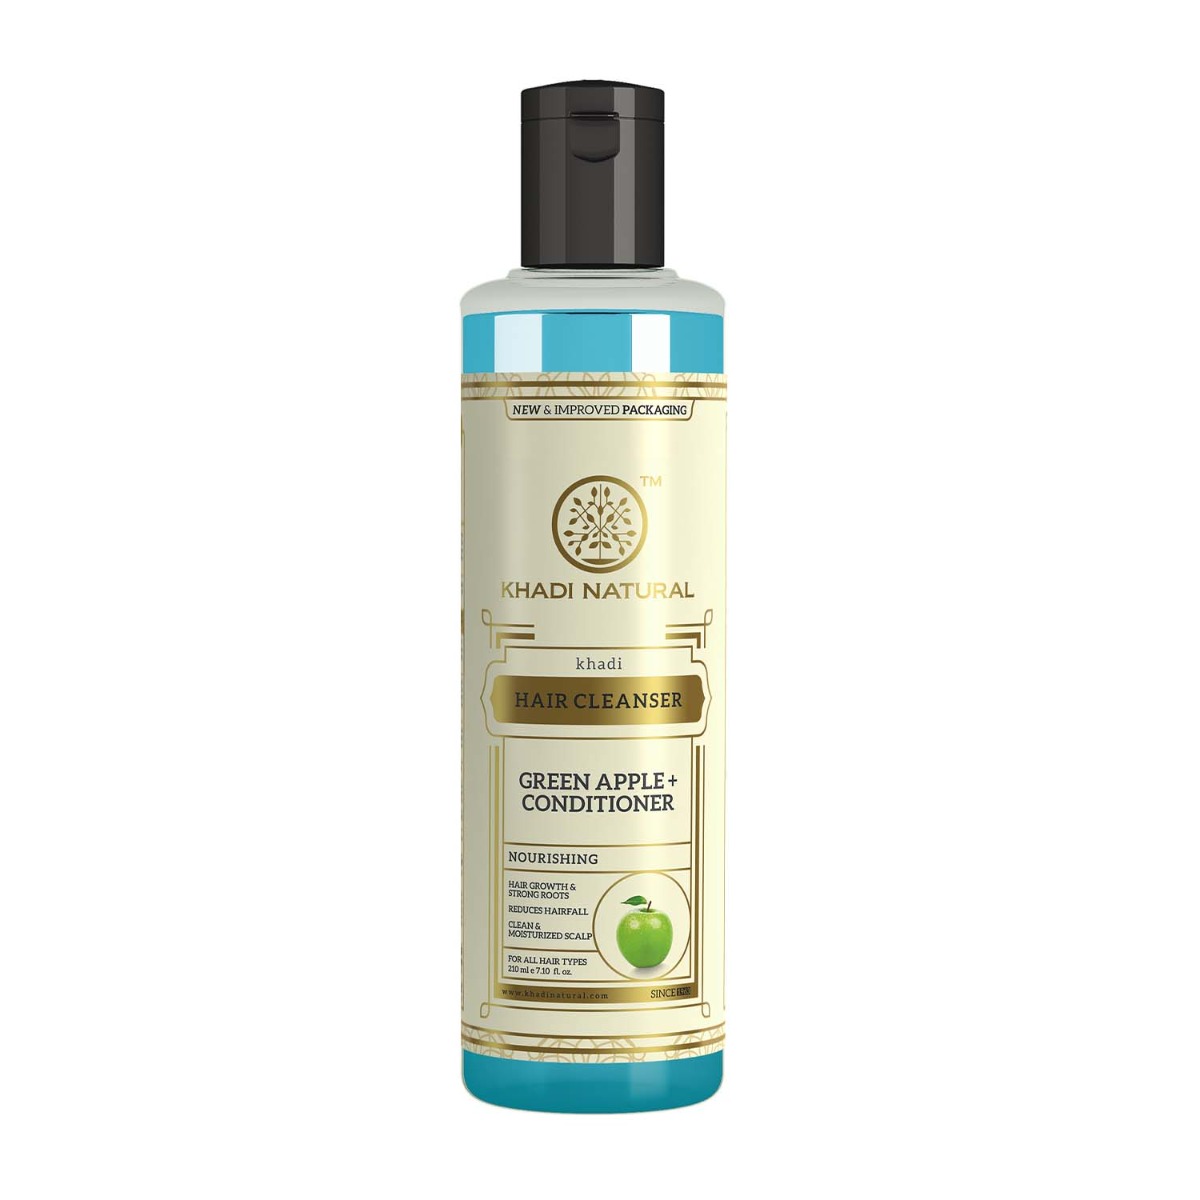 Khadi Natural Green Apple + Conditioner Hair Cleanser, 210ml